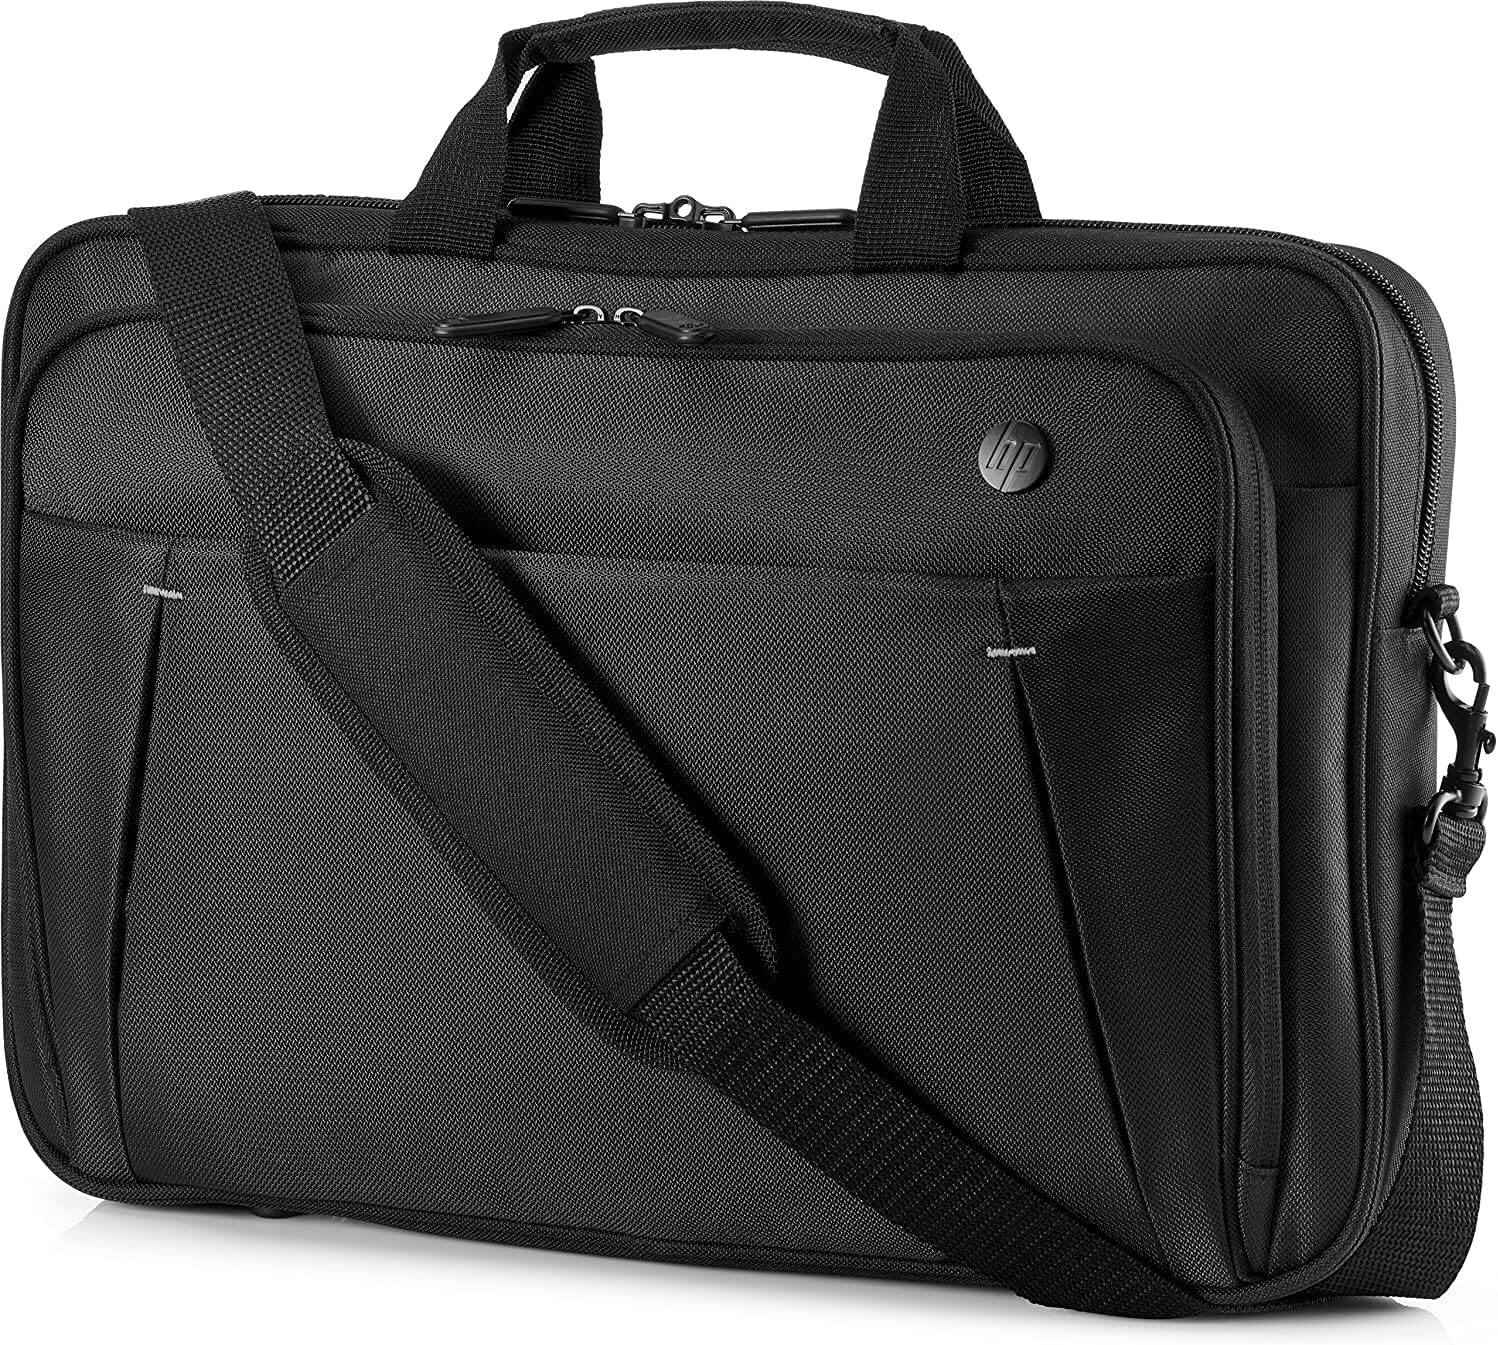 HP Business Top Load 15.6-inch Laptop Bag P/N:2SC66AA